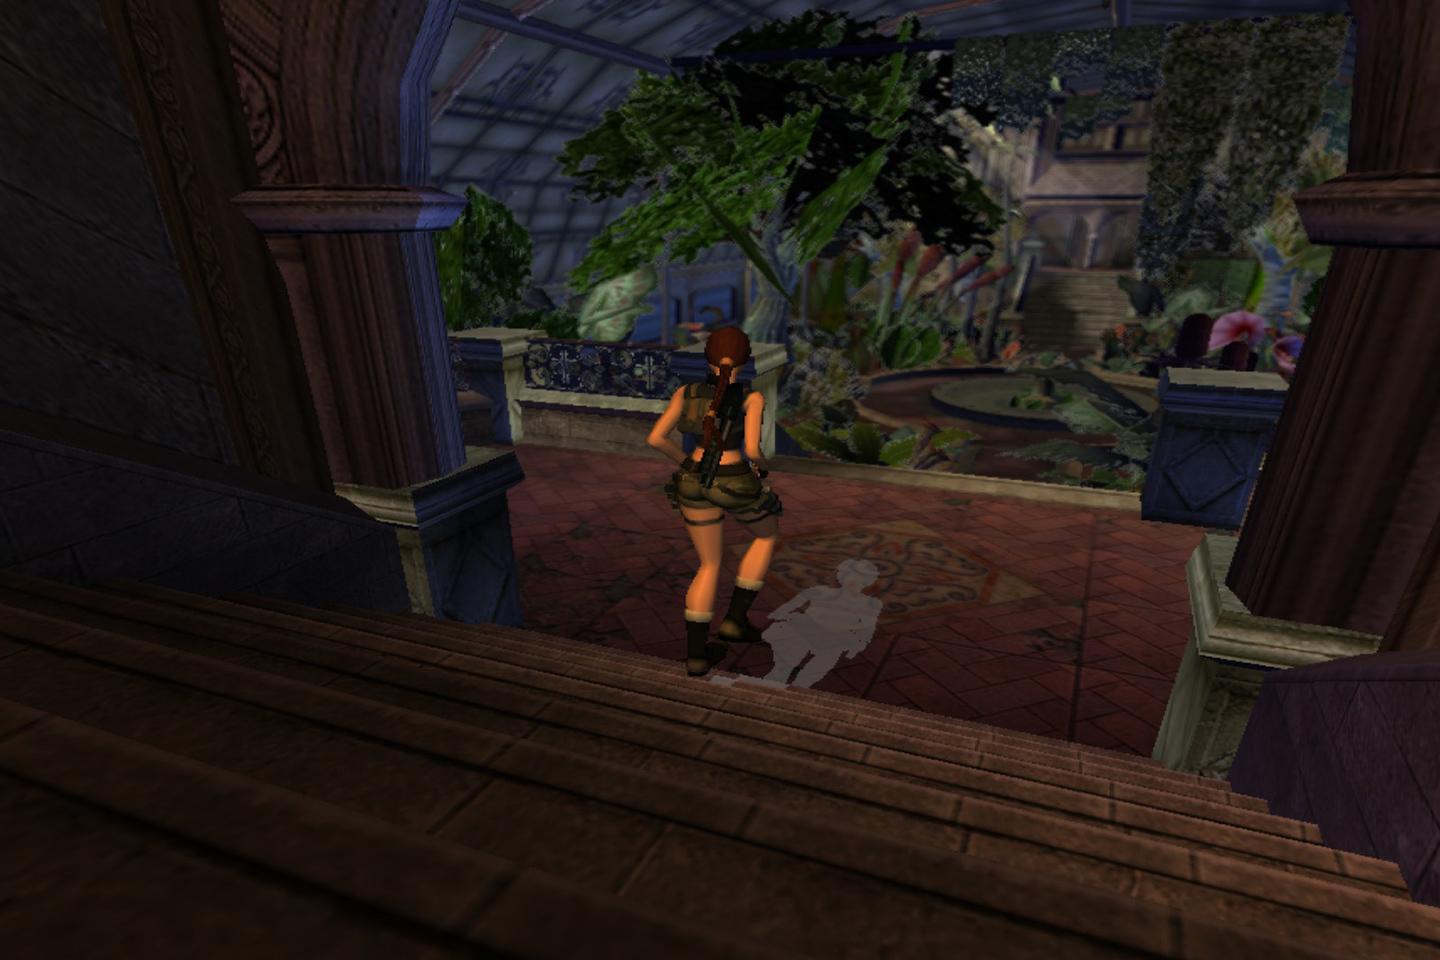 Lara walking down stairs toward interior pond and trees.